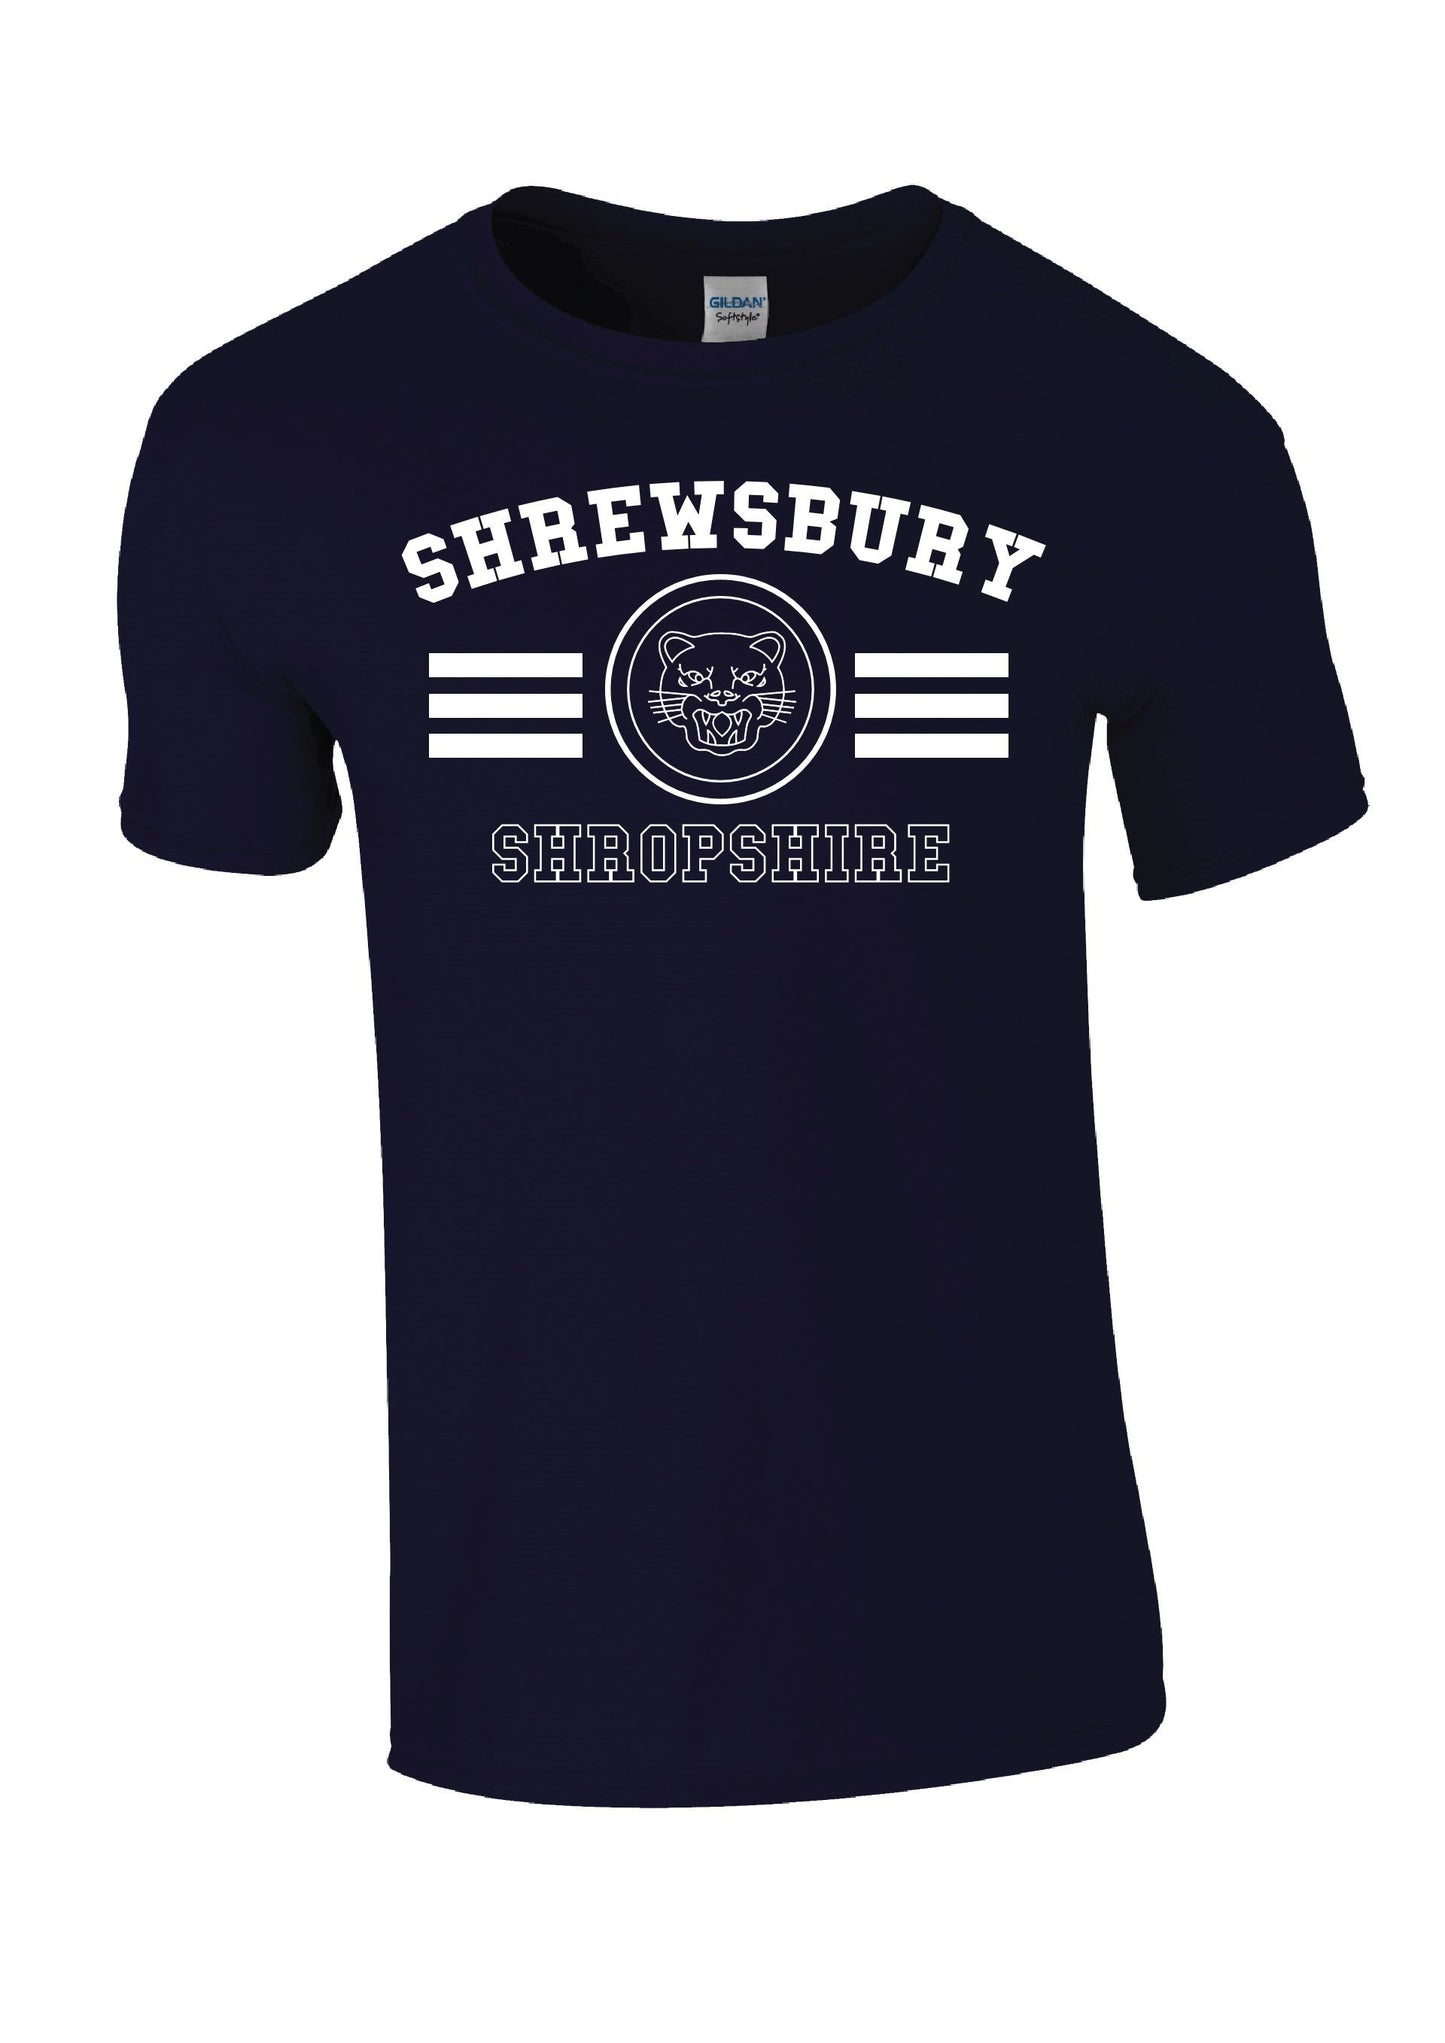 Shrewsbury Tiger T-shirt - Navy - S